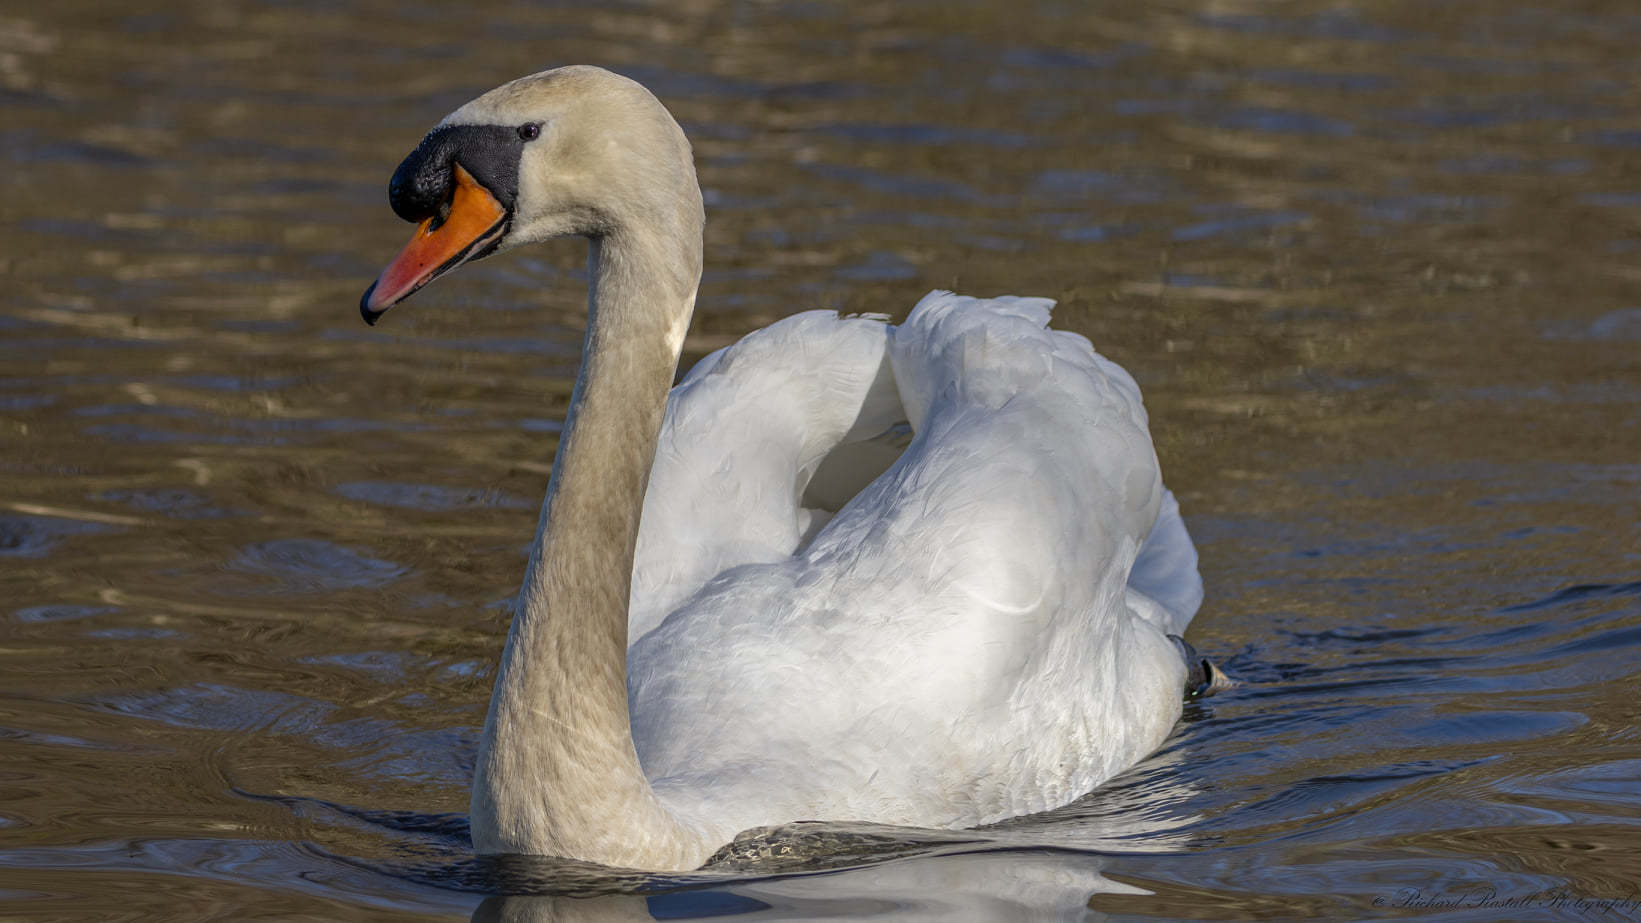 No luck catching them swans then (Richard Rastall)